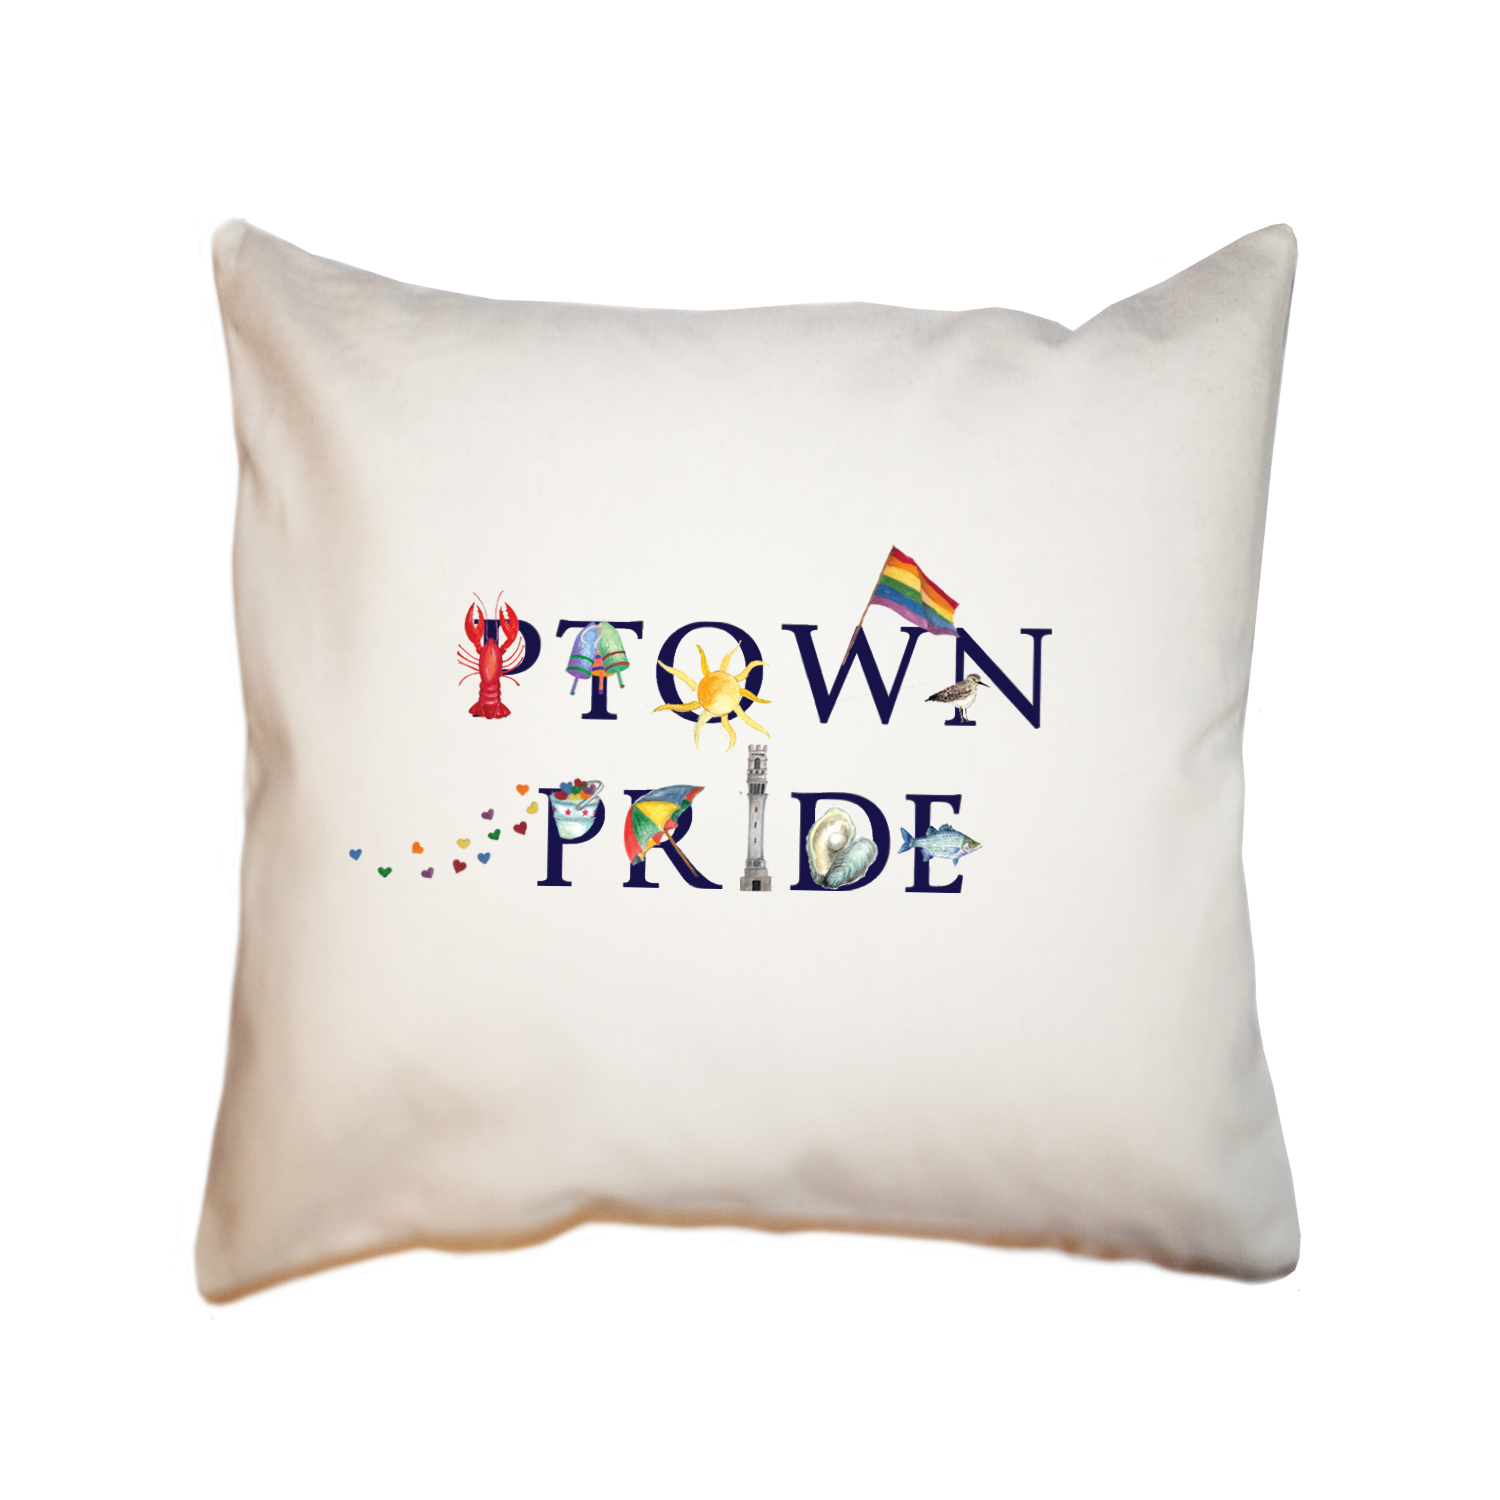 ptown pride square pillow